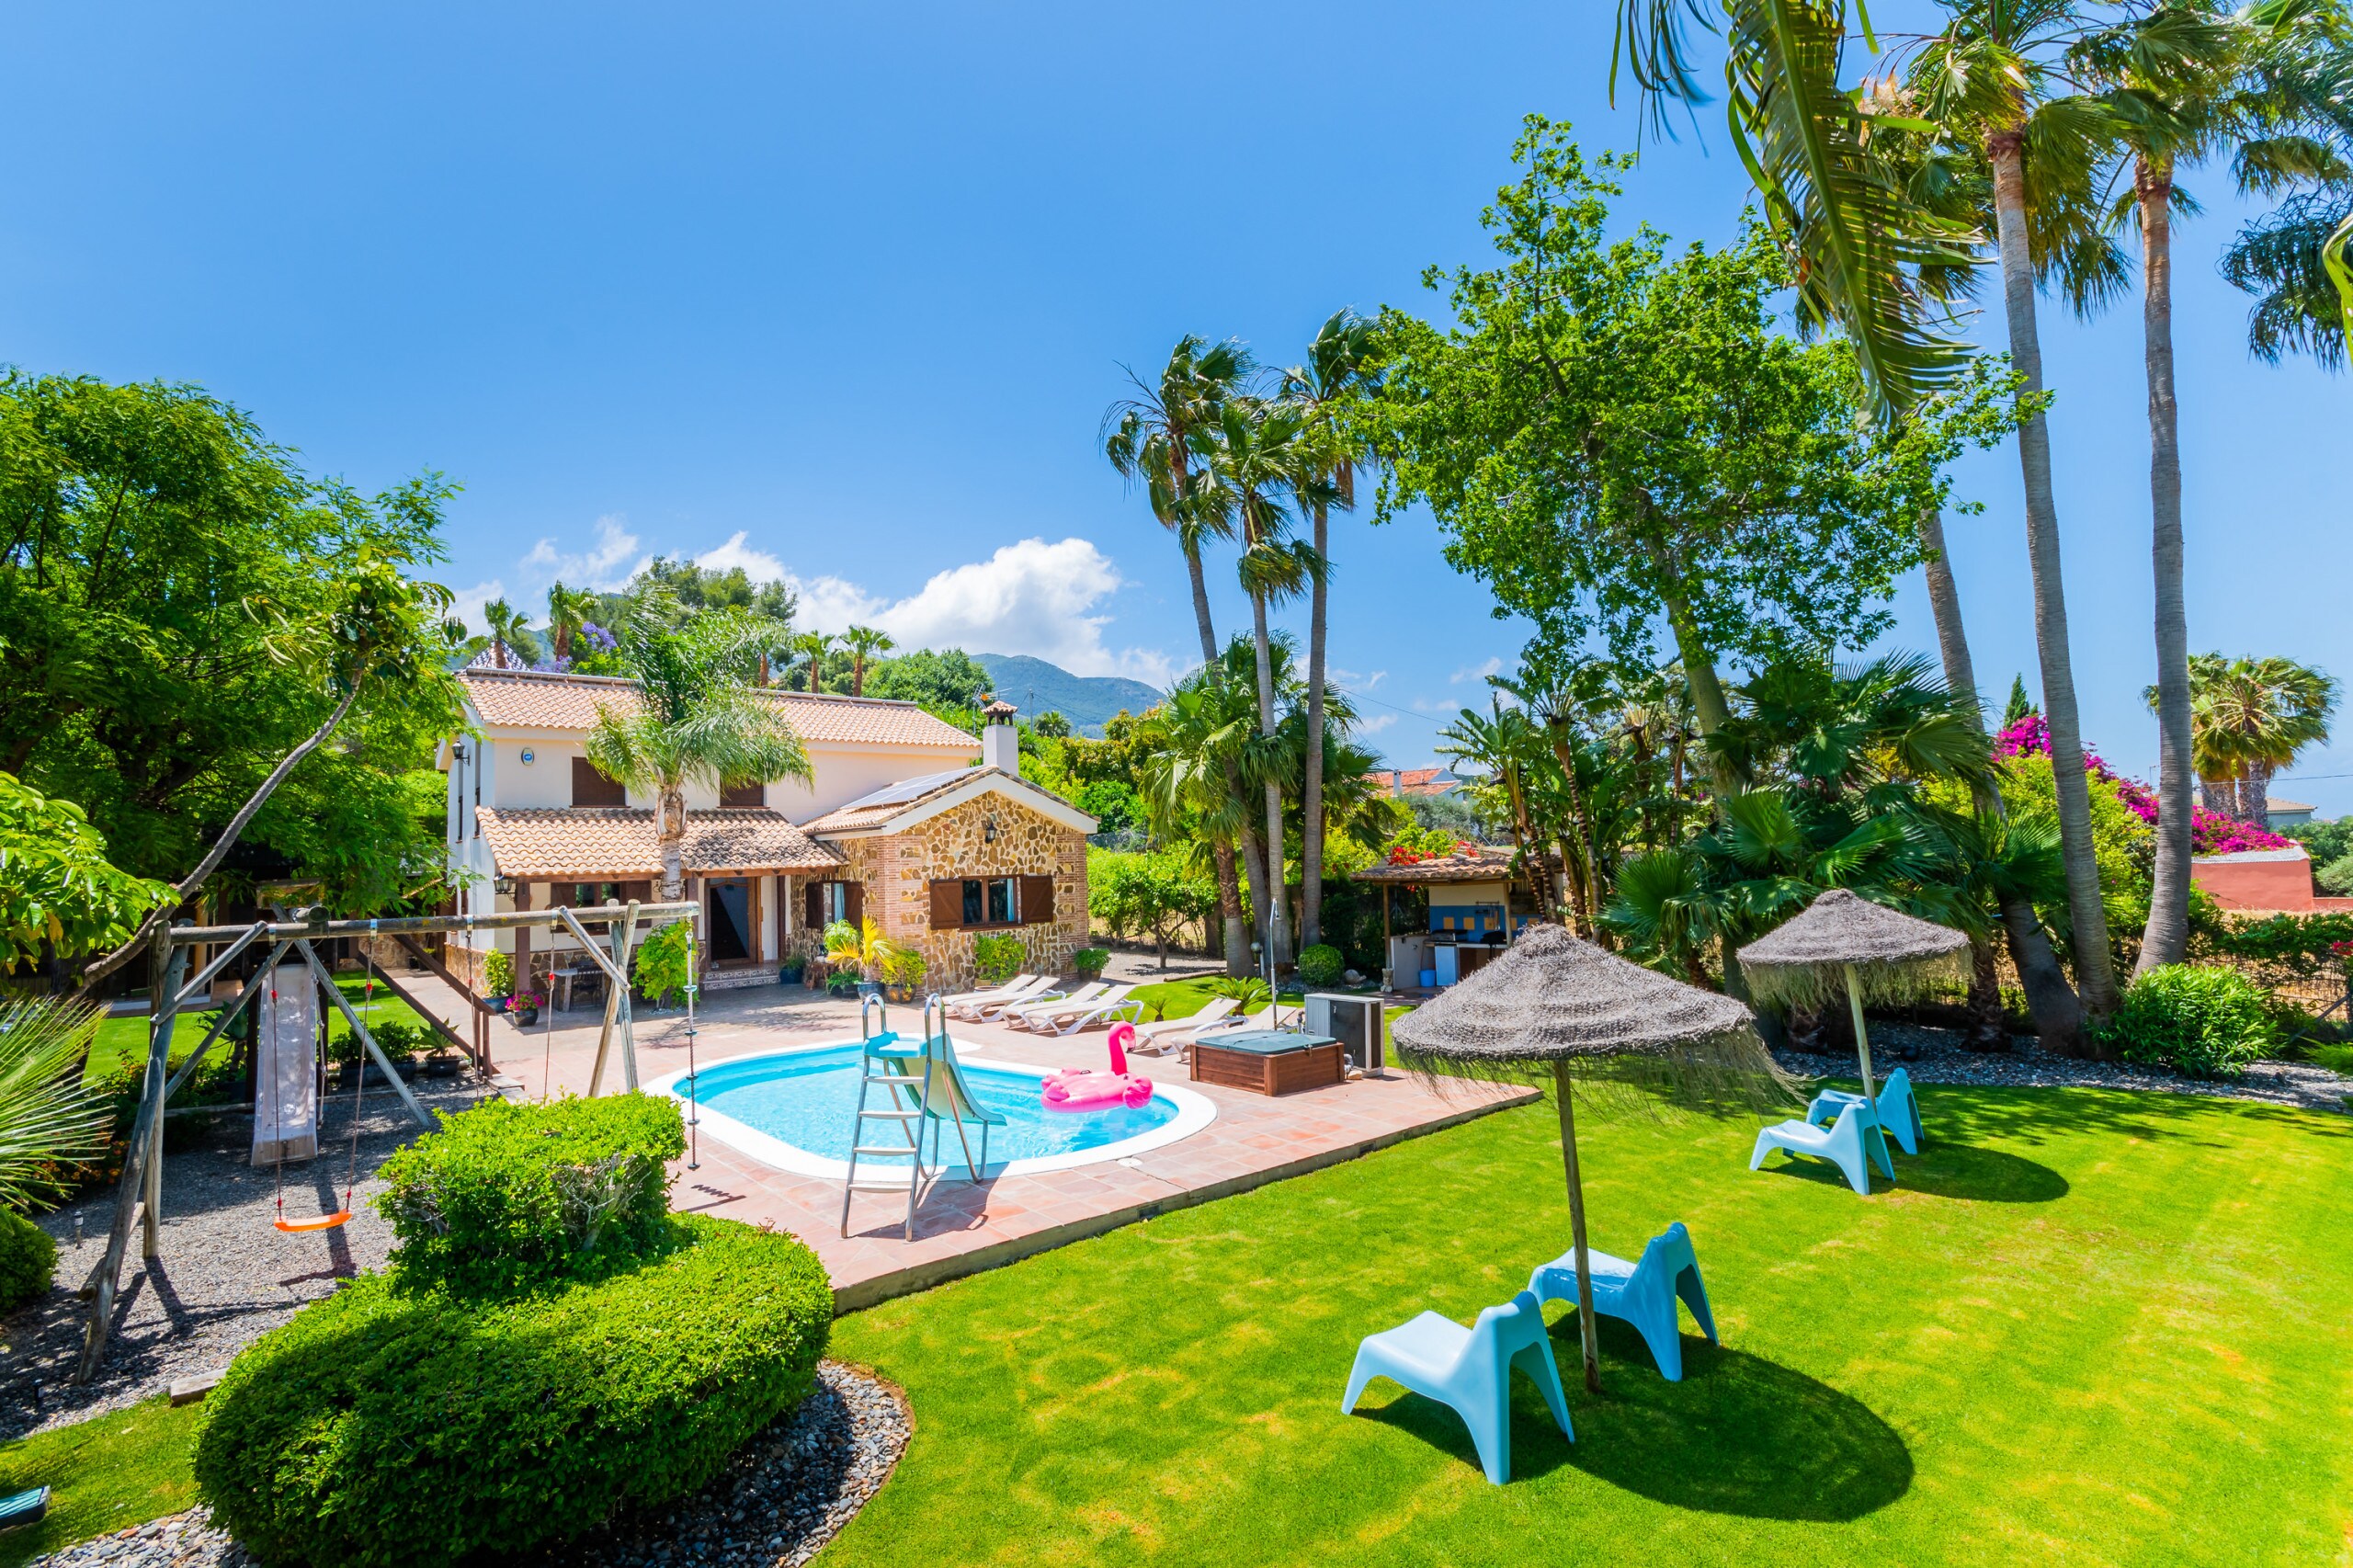 Enjoy the heated pool of this villa in Alhaurín de la Torre